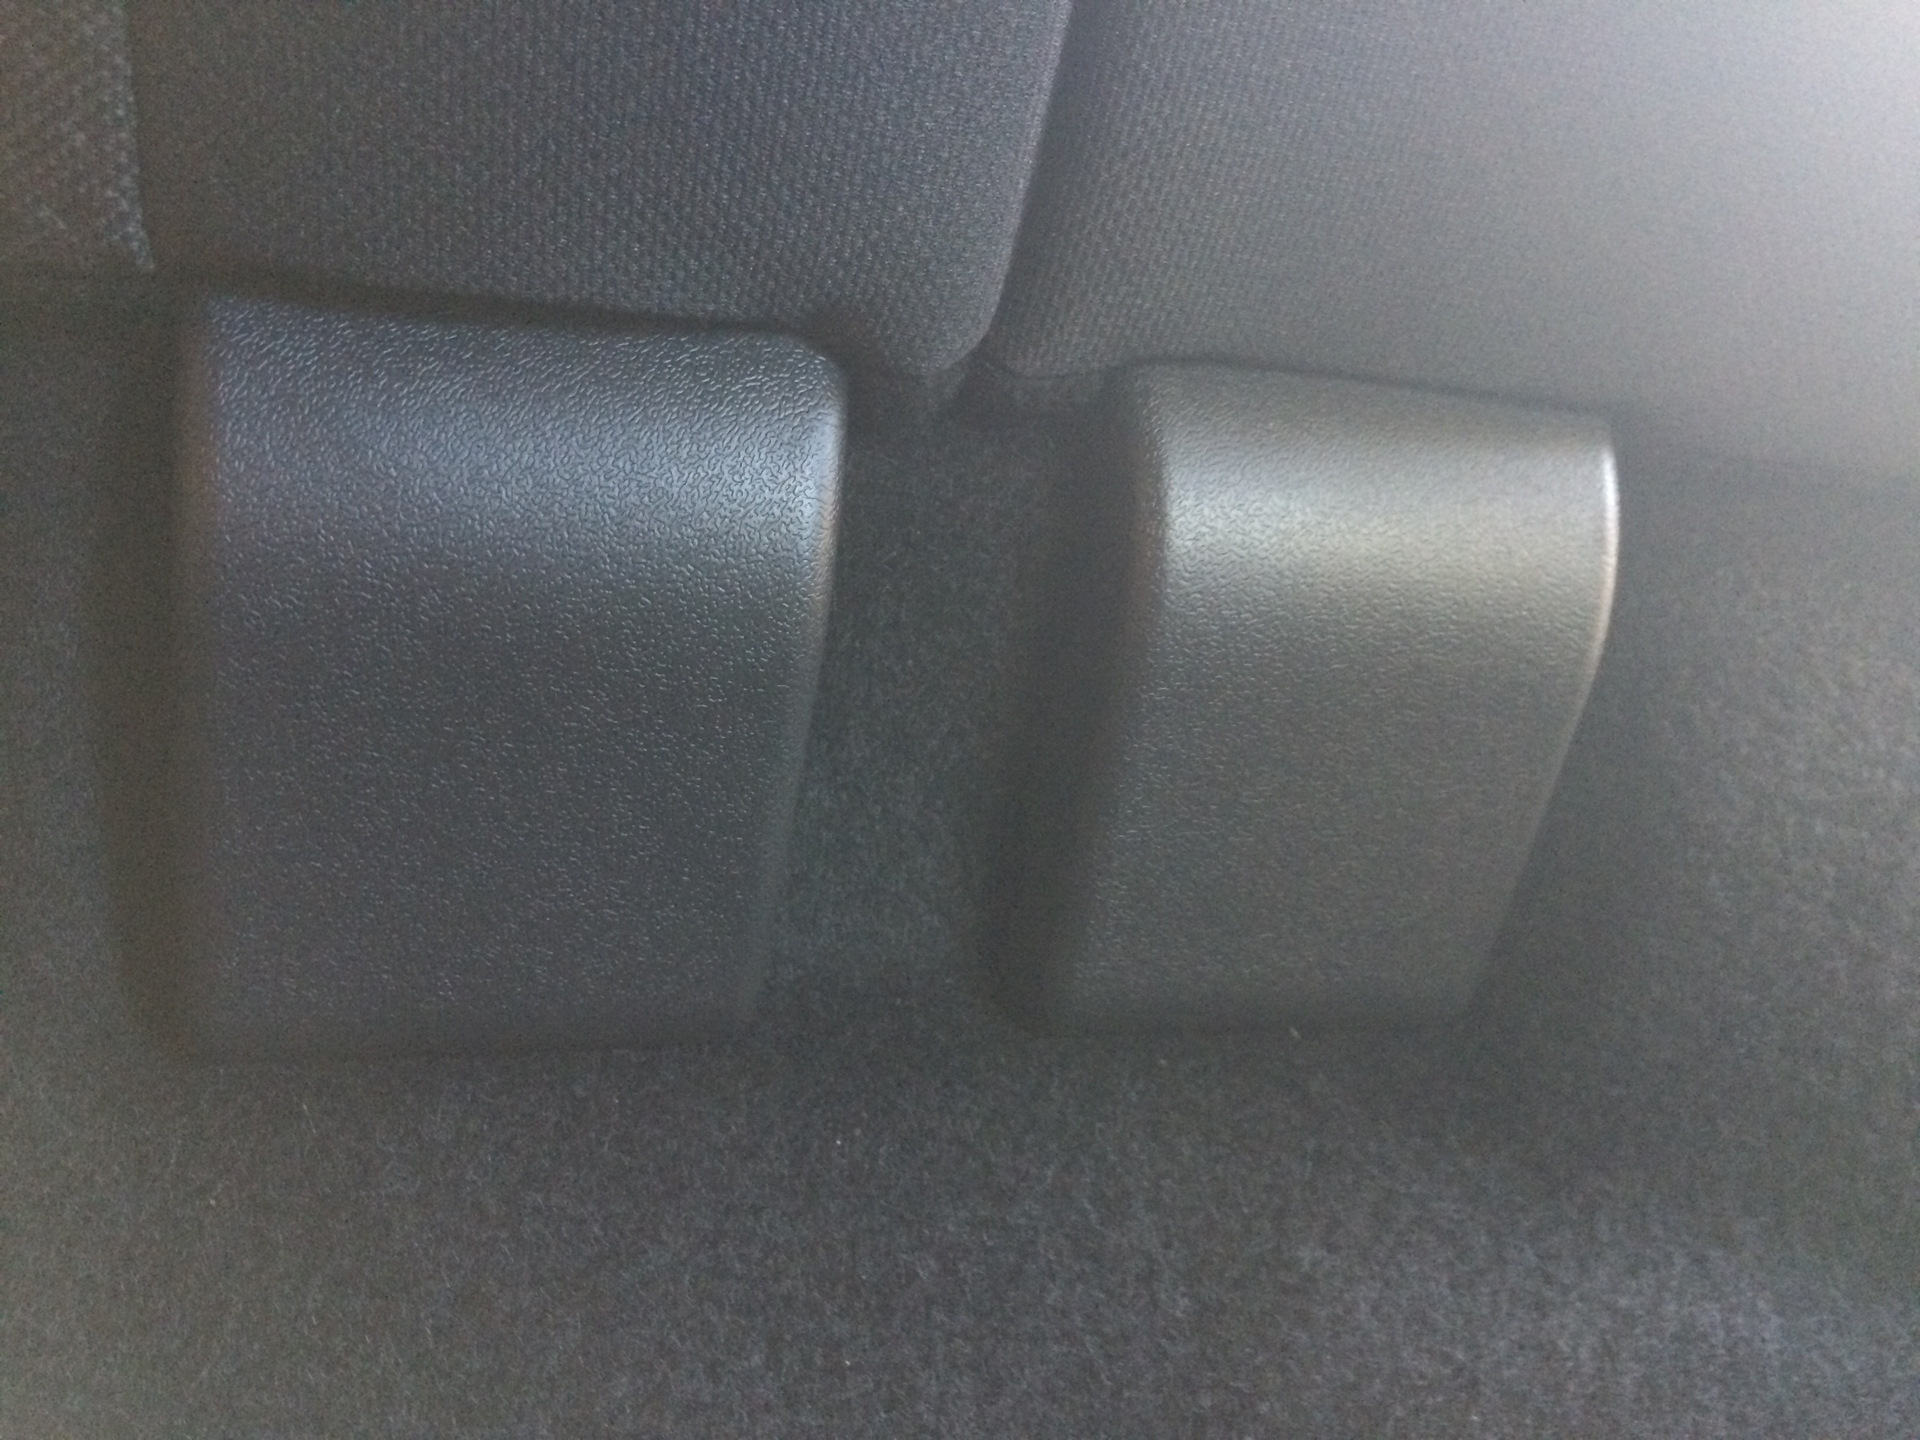 Заглушка на заднее сидение Nissan x-Trail. Заглушки заднего сидения w164. Заглушка крепления задних сидений Приора универсал. Заглушка петли заднего сиденья Калина. Скрип в ниссане